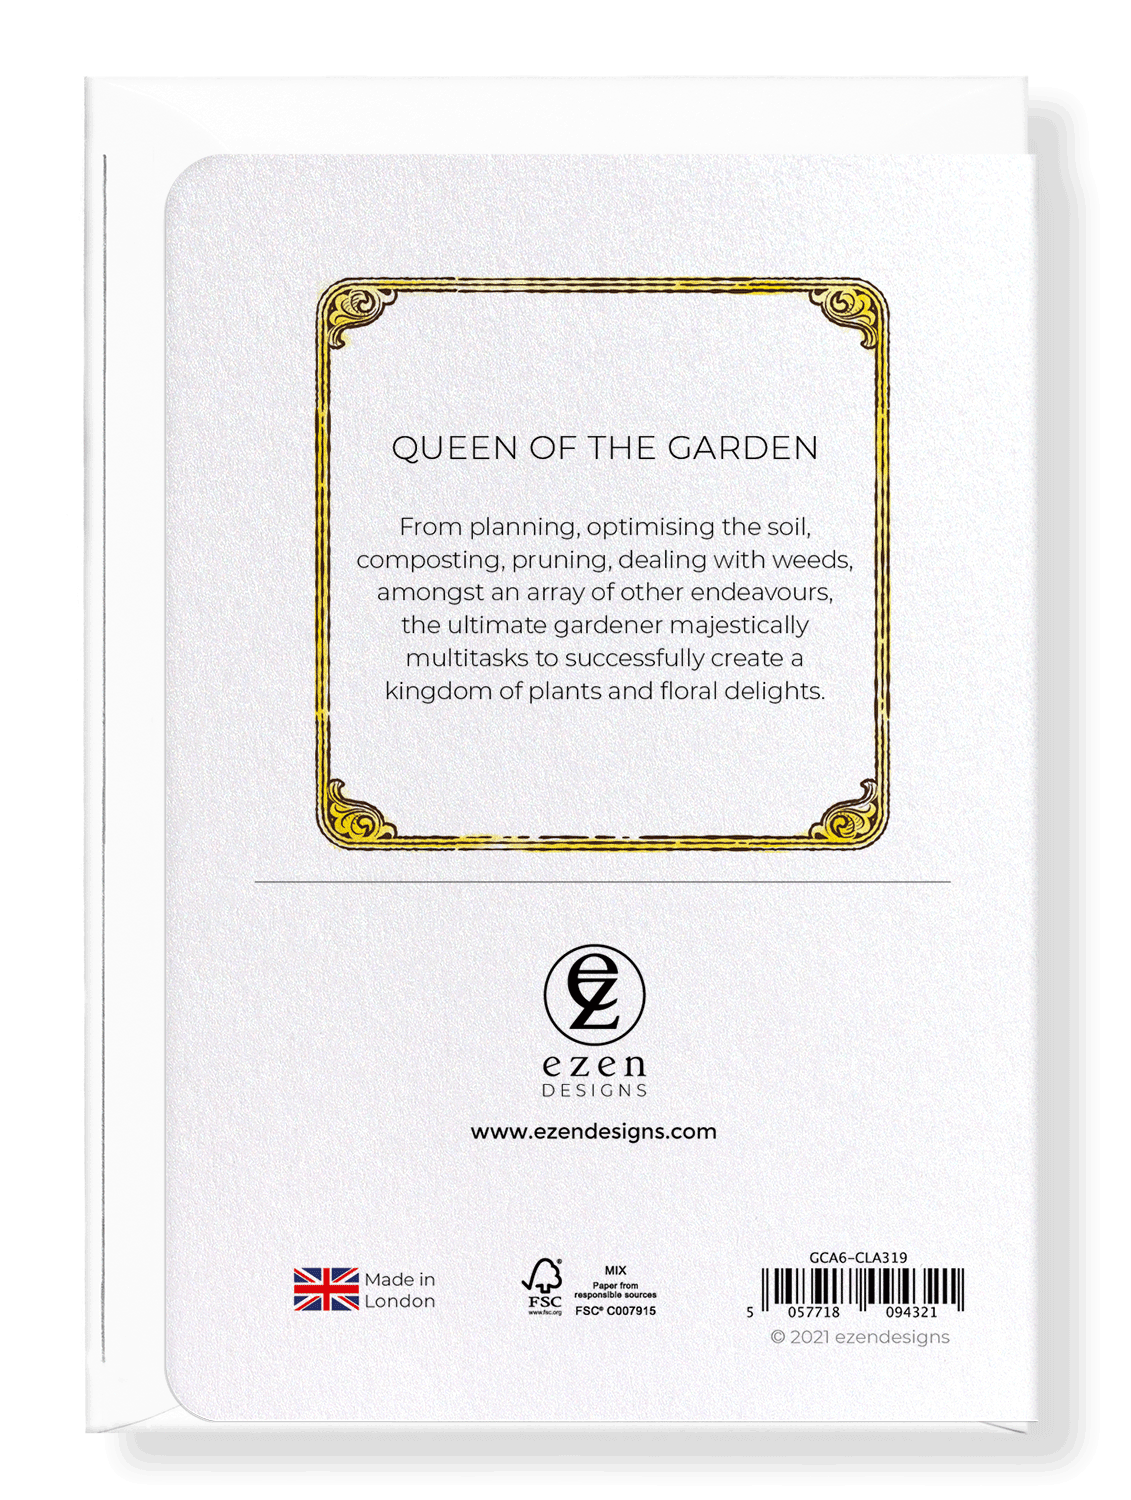 Ezen Designs - Queen of the garden - Greeting Card - Back